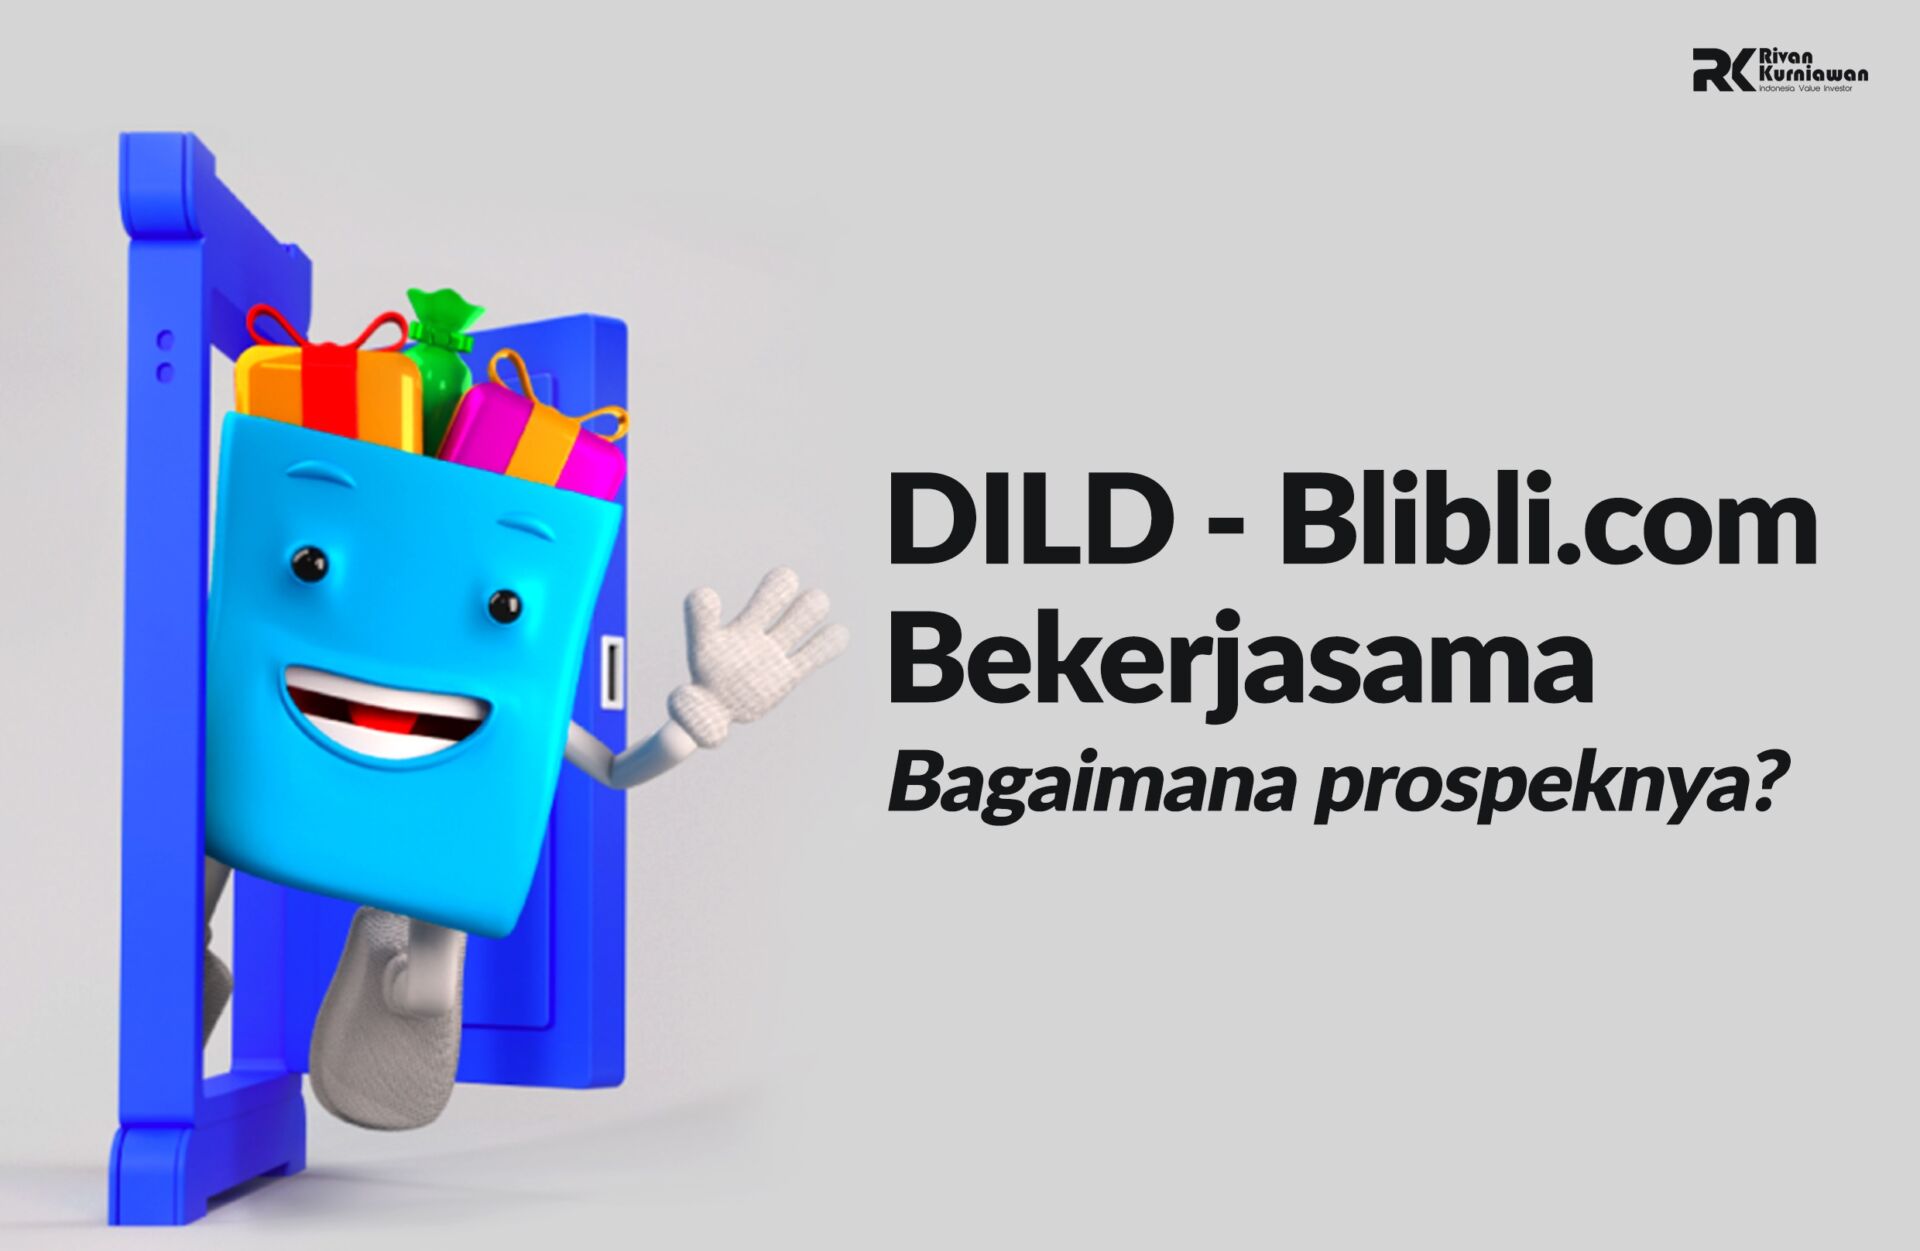 DILD - Blibli